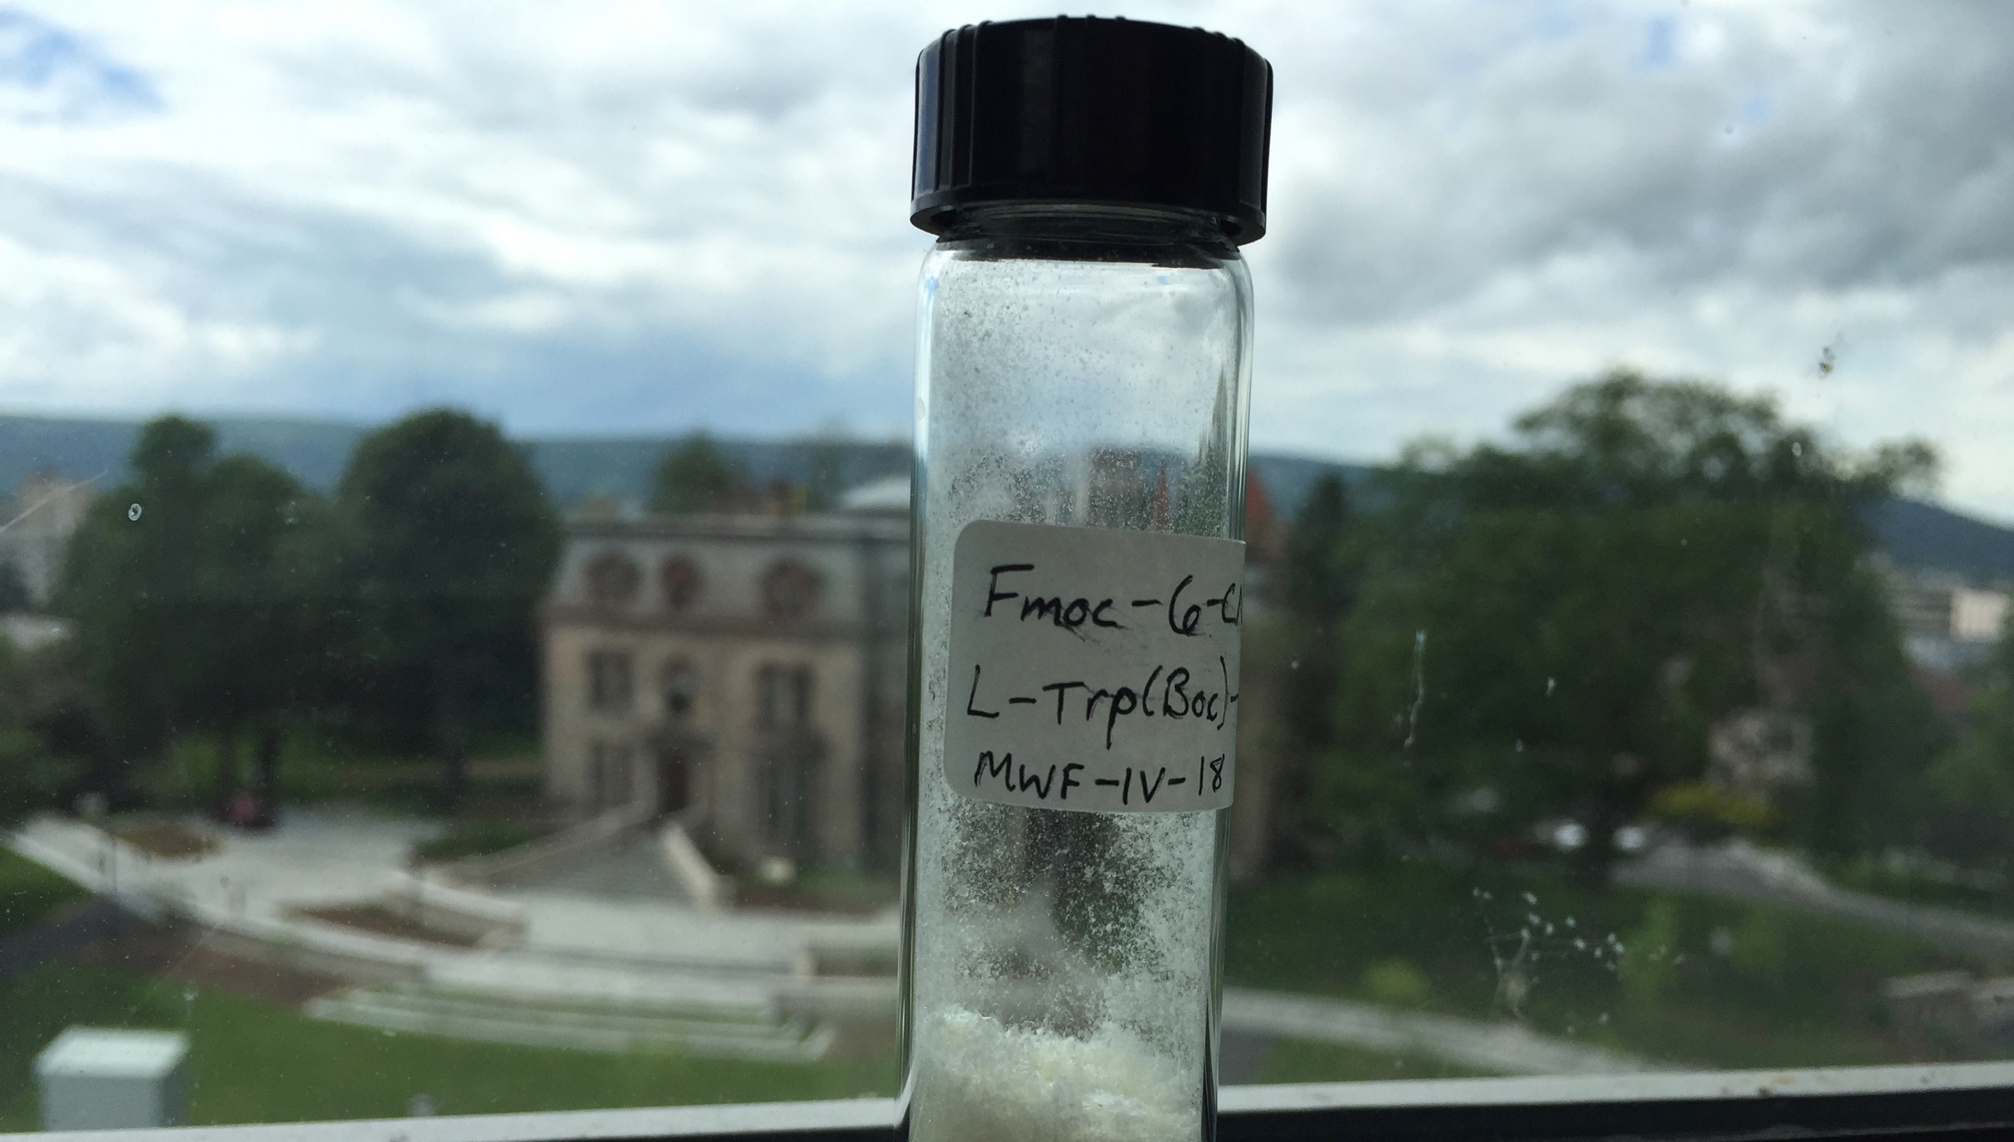 Faculty Summer Research: Amino Acids through Spectroscopy